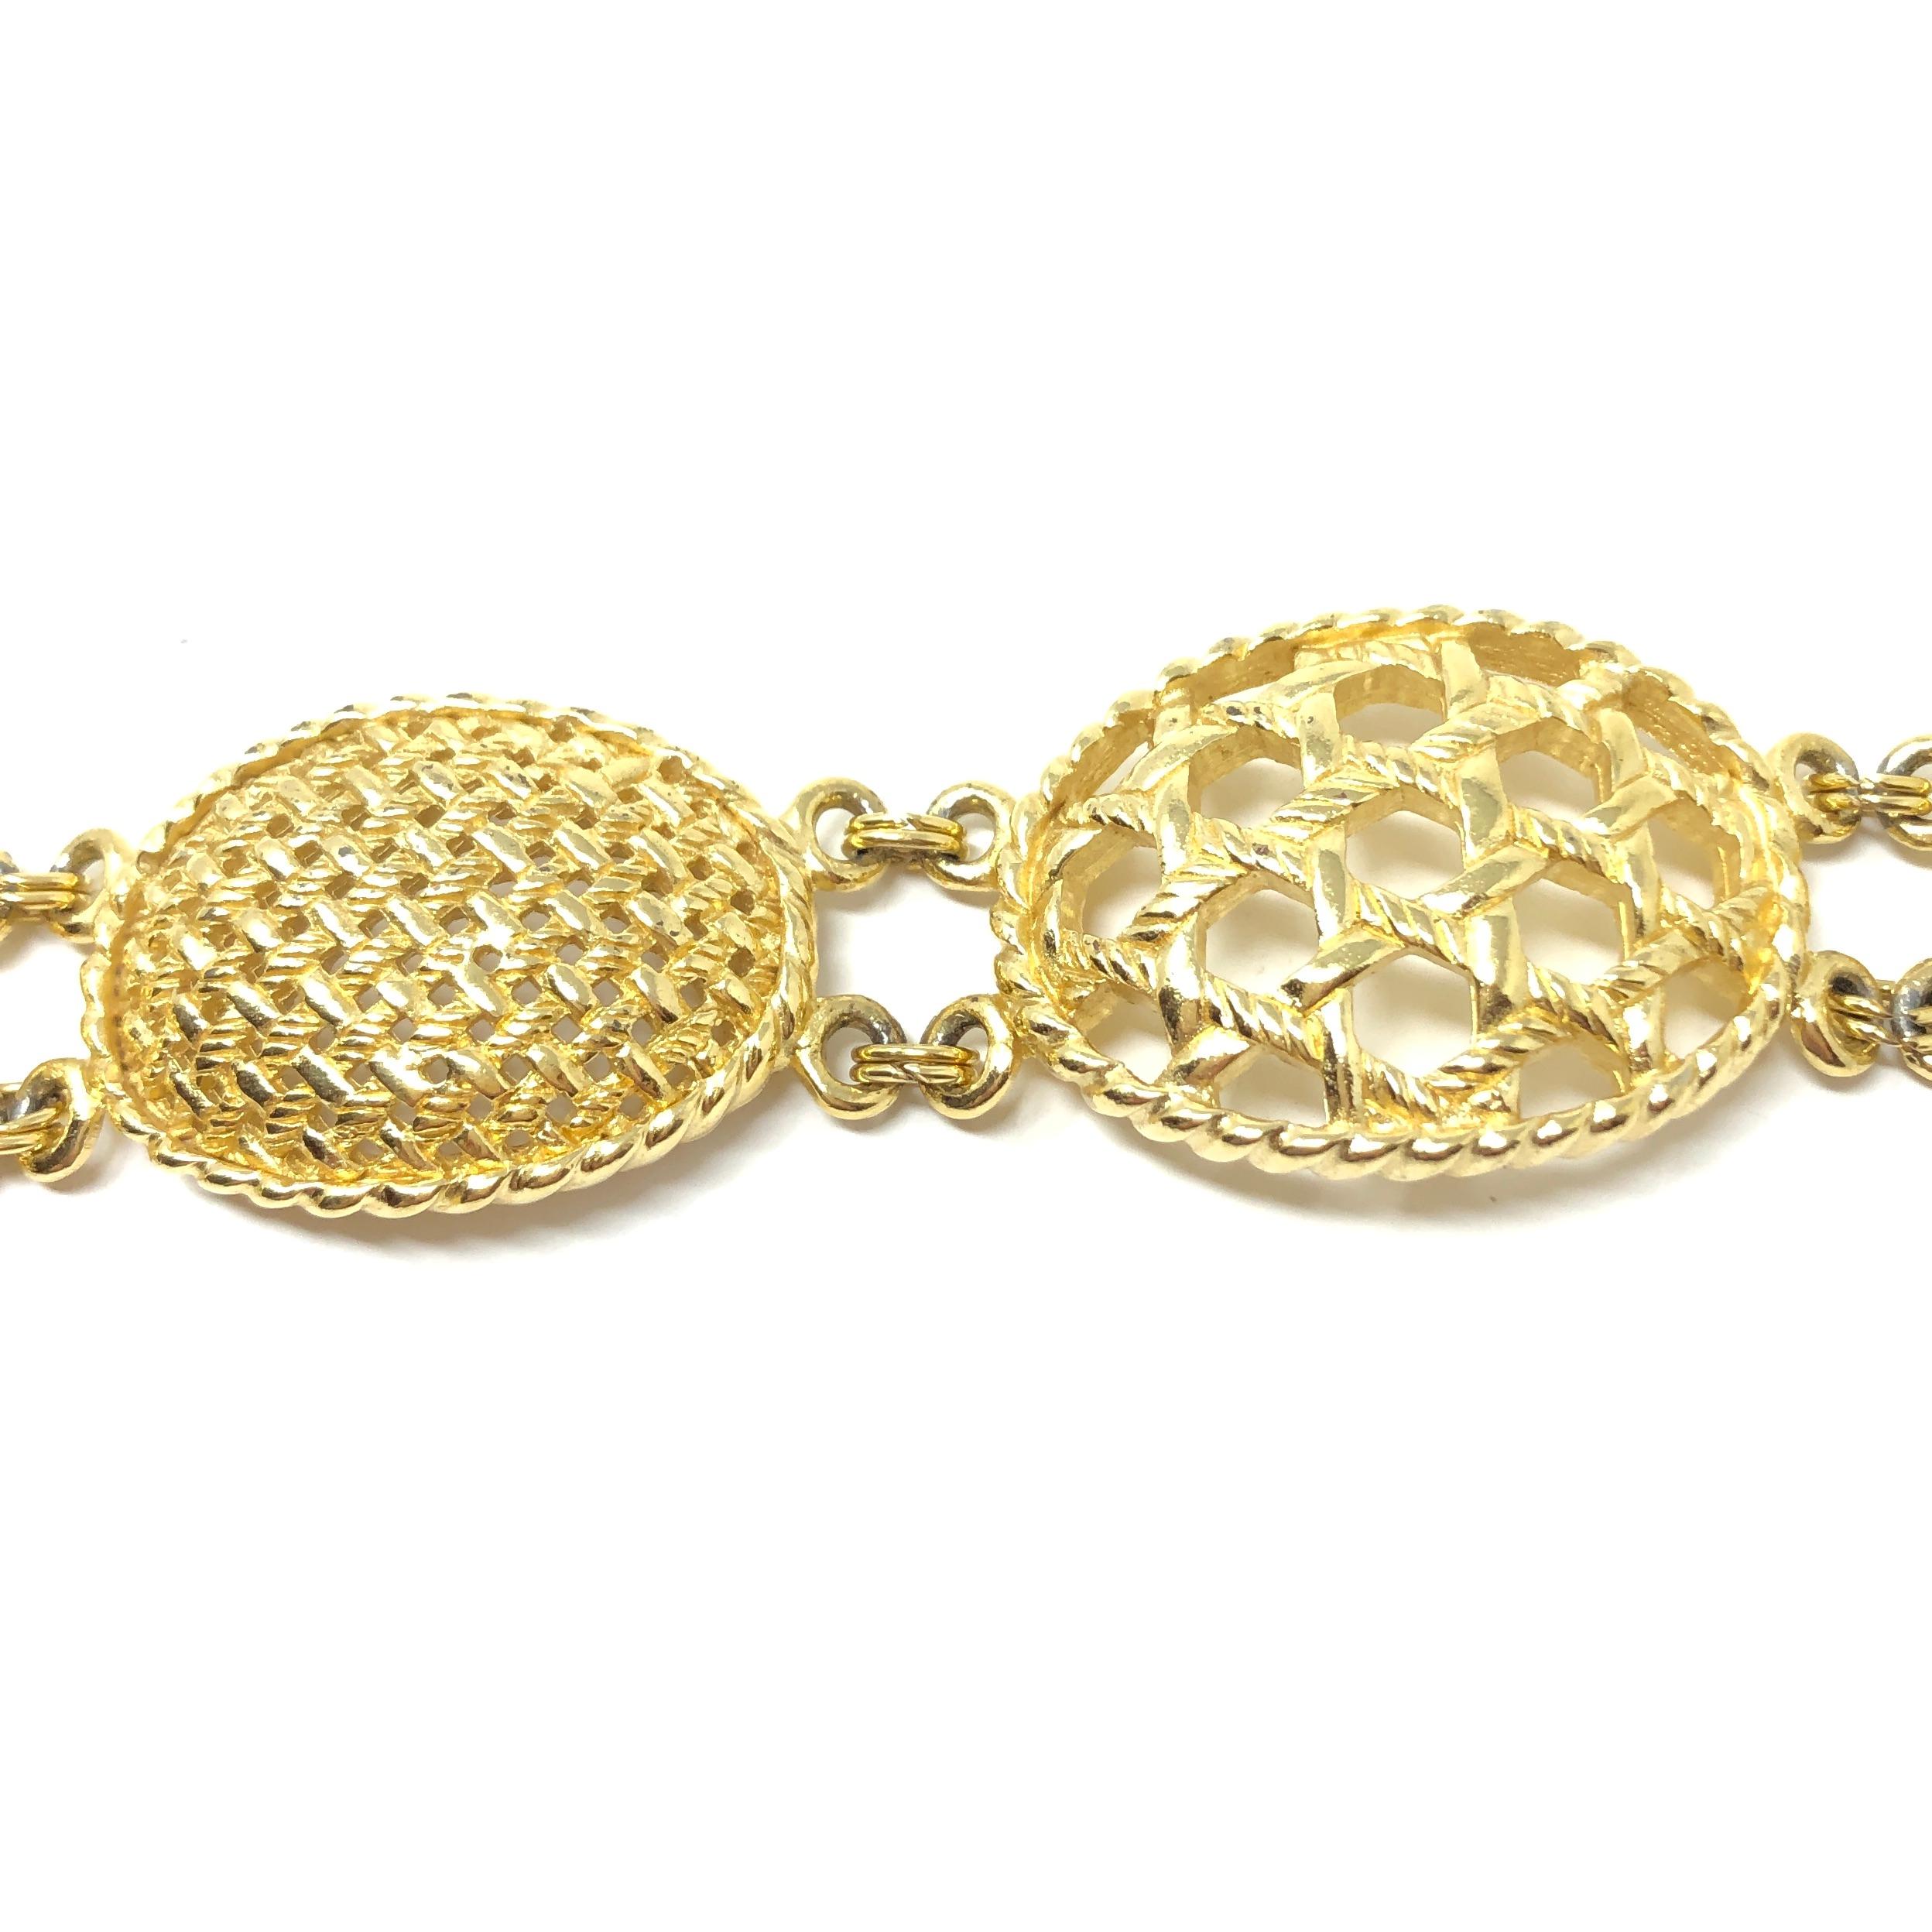 Christian Dior 1980s Gold Plated 'Cannage' Design Vintage Bracelet In Excellent Condition For Sale In Skelmersdale, GB